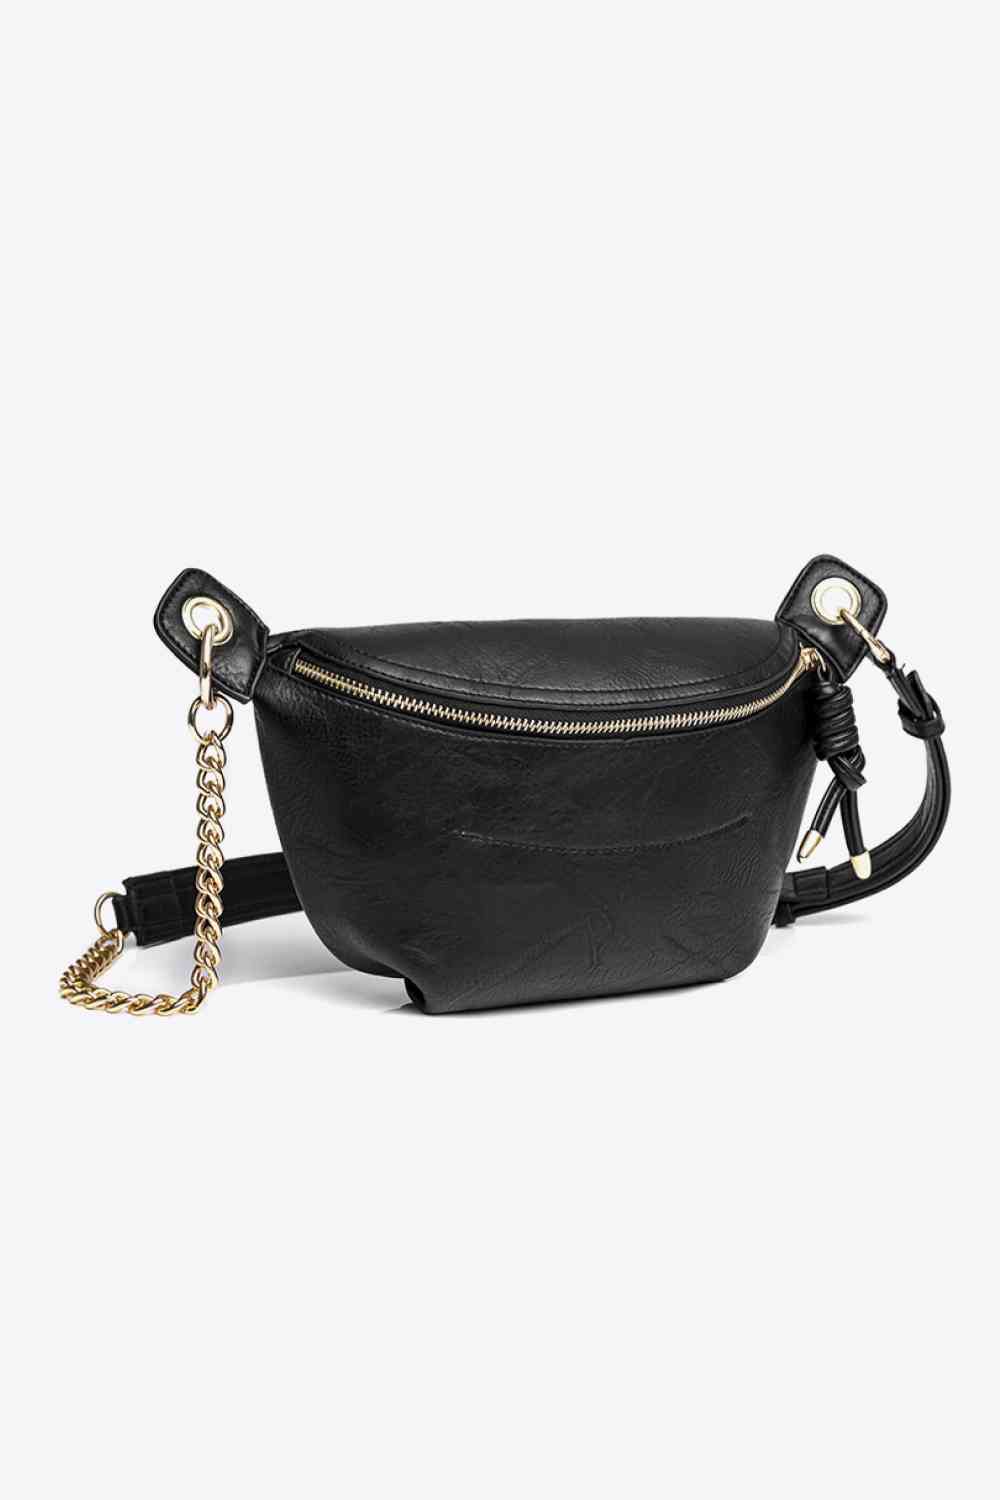 TEEK - PU Leather Chain Strap Crossbody Bag BAG TEEK Trend   